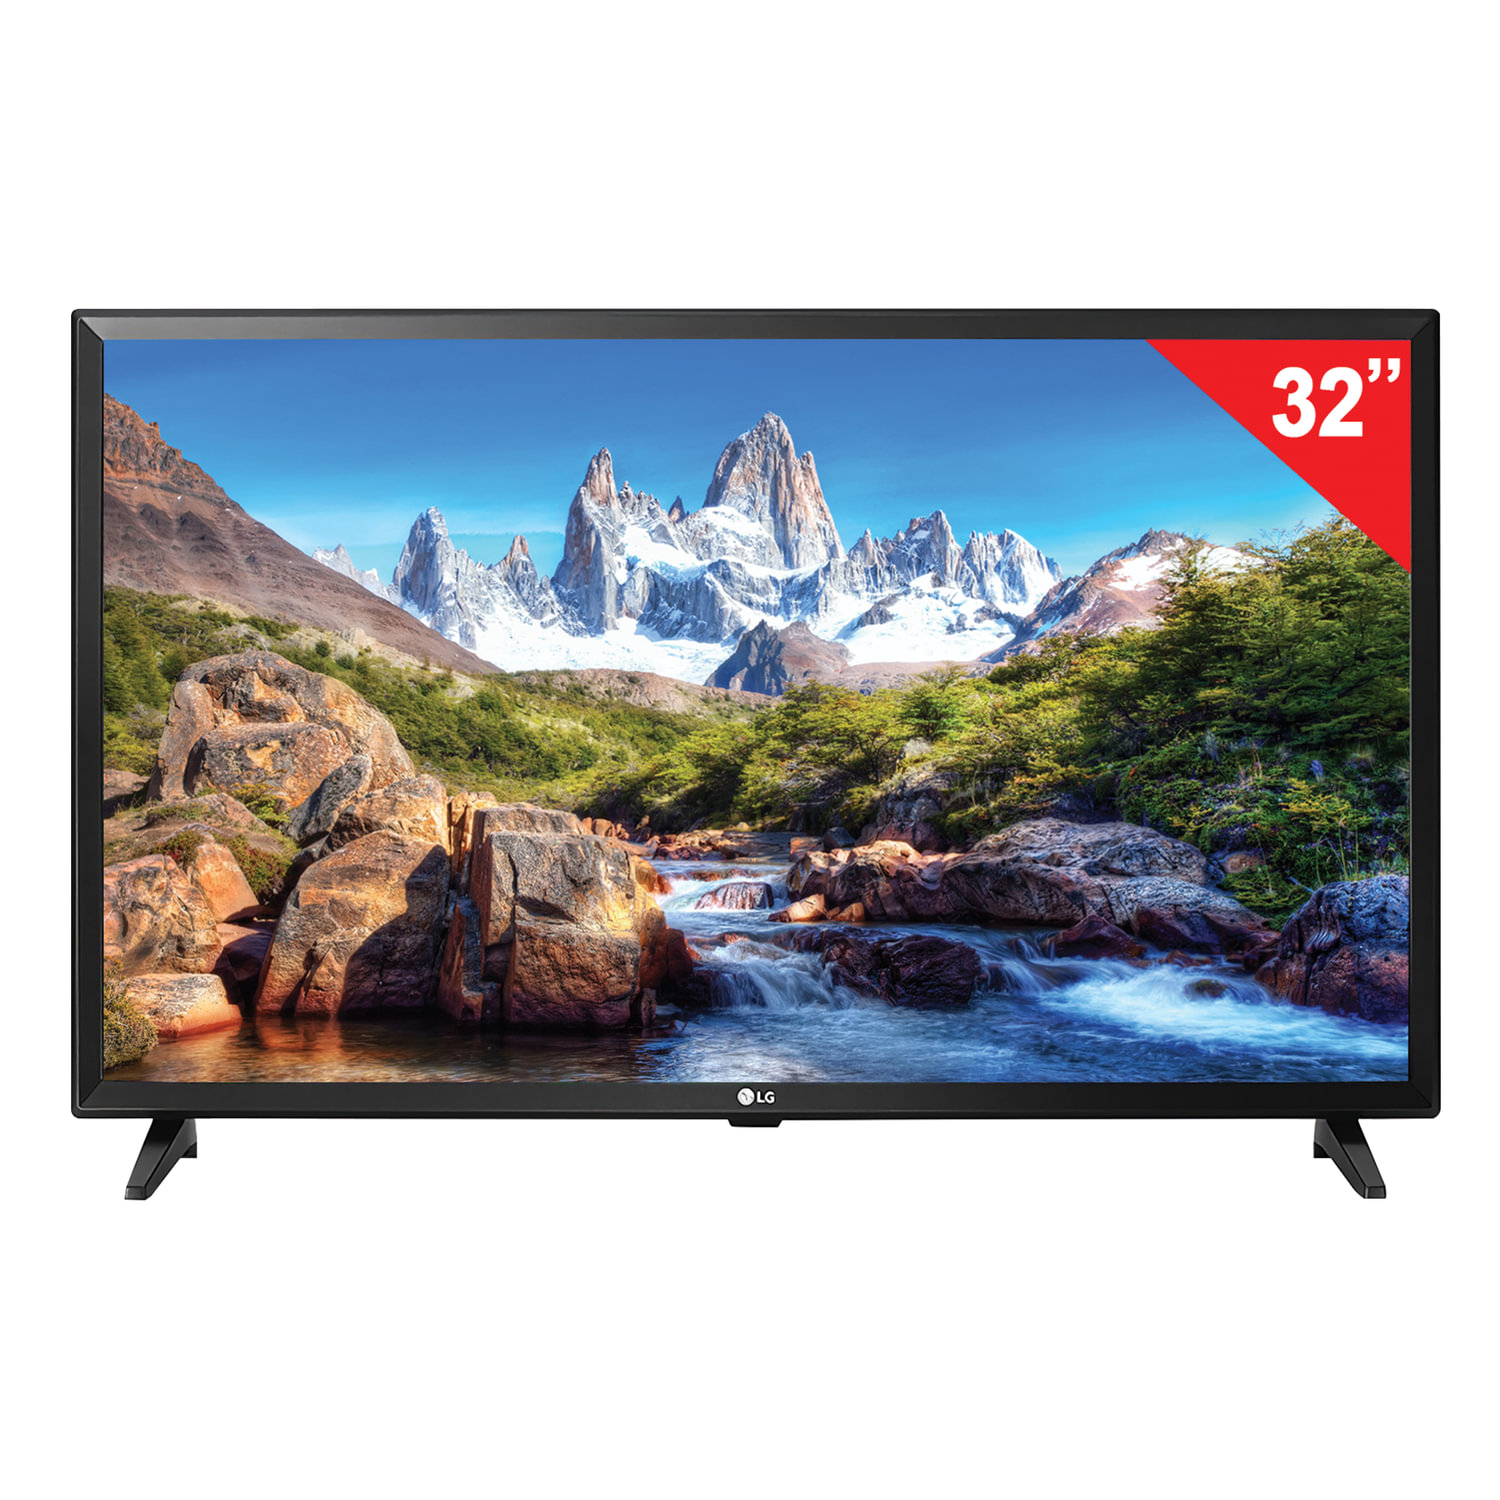 Магазин м видео телевизор цена. Телевизор LG 32lj510u. LG телевизоры 43 дюйма смарт. LG 32lj510u 2017 led. Телевизор LG Smart TV 32 дюйма.